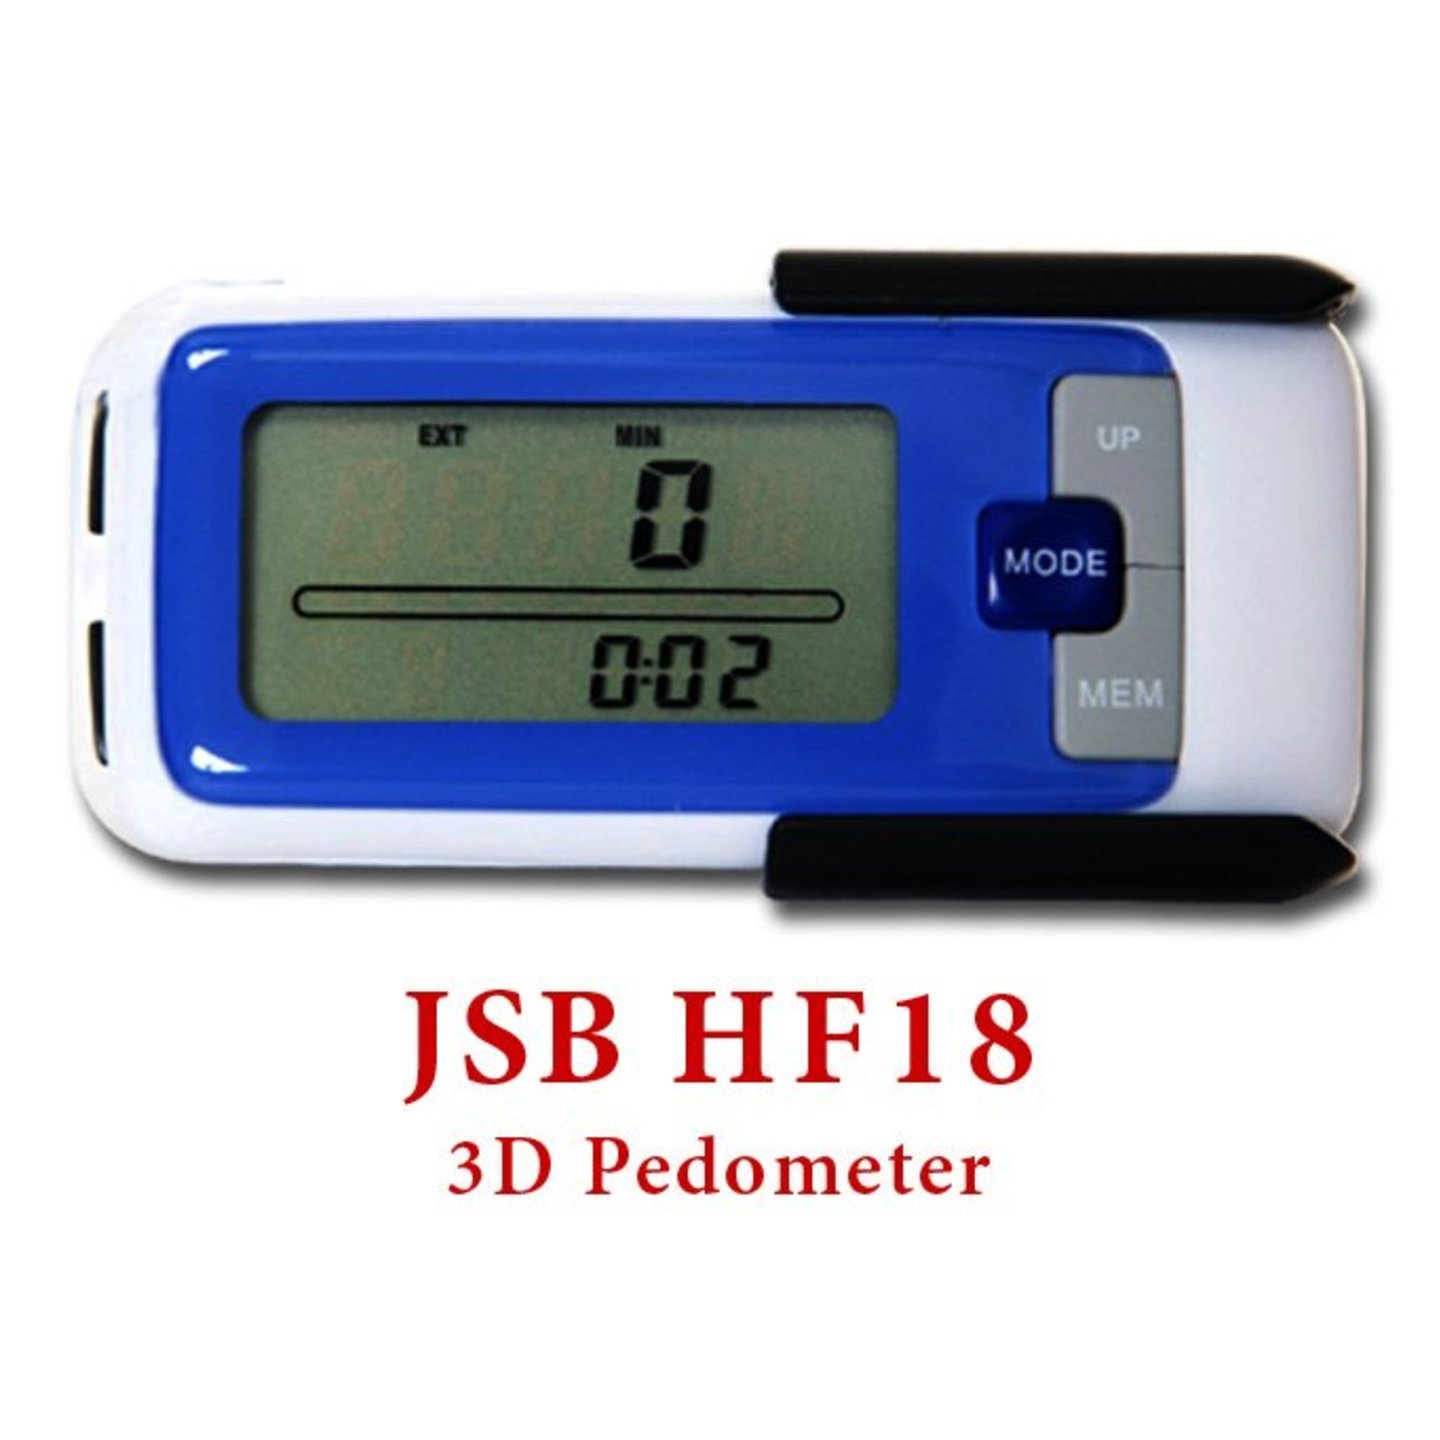 JSB HF18 3D Pedometer